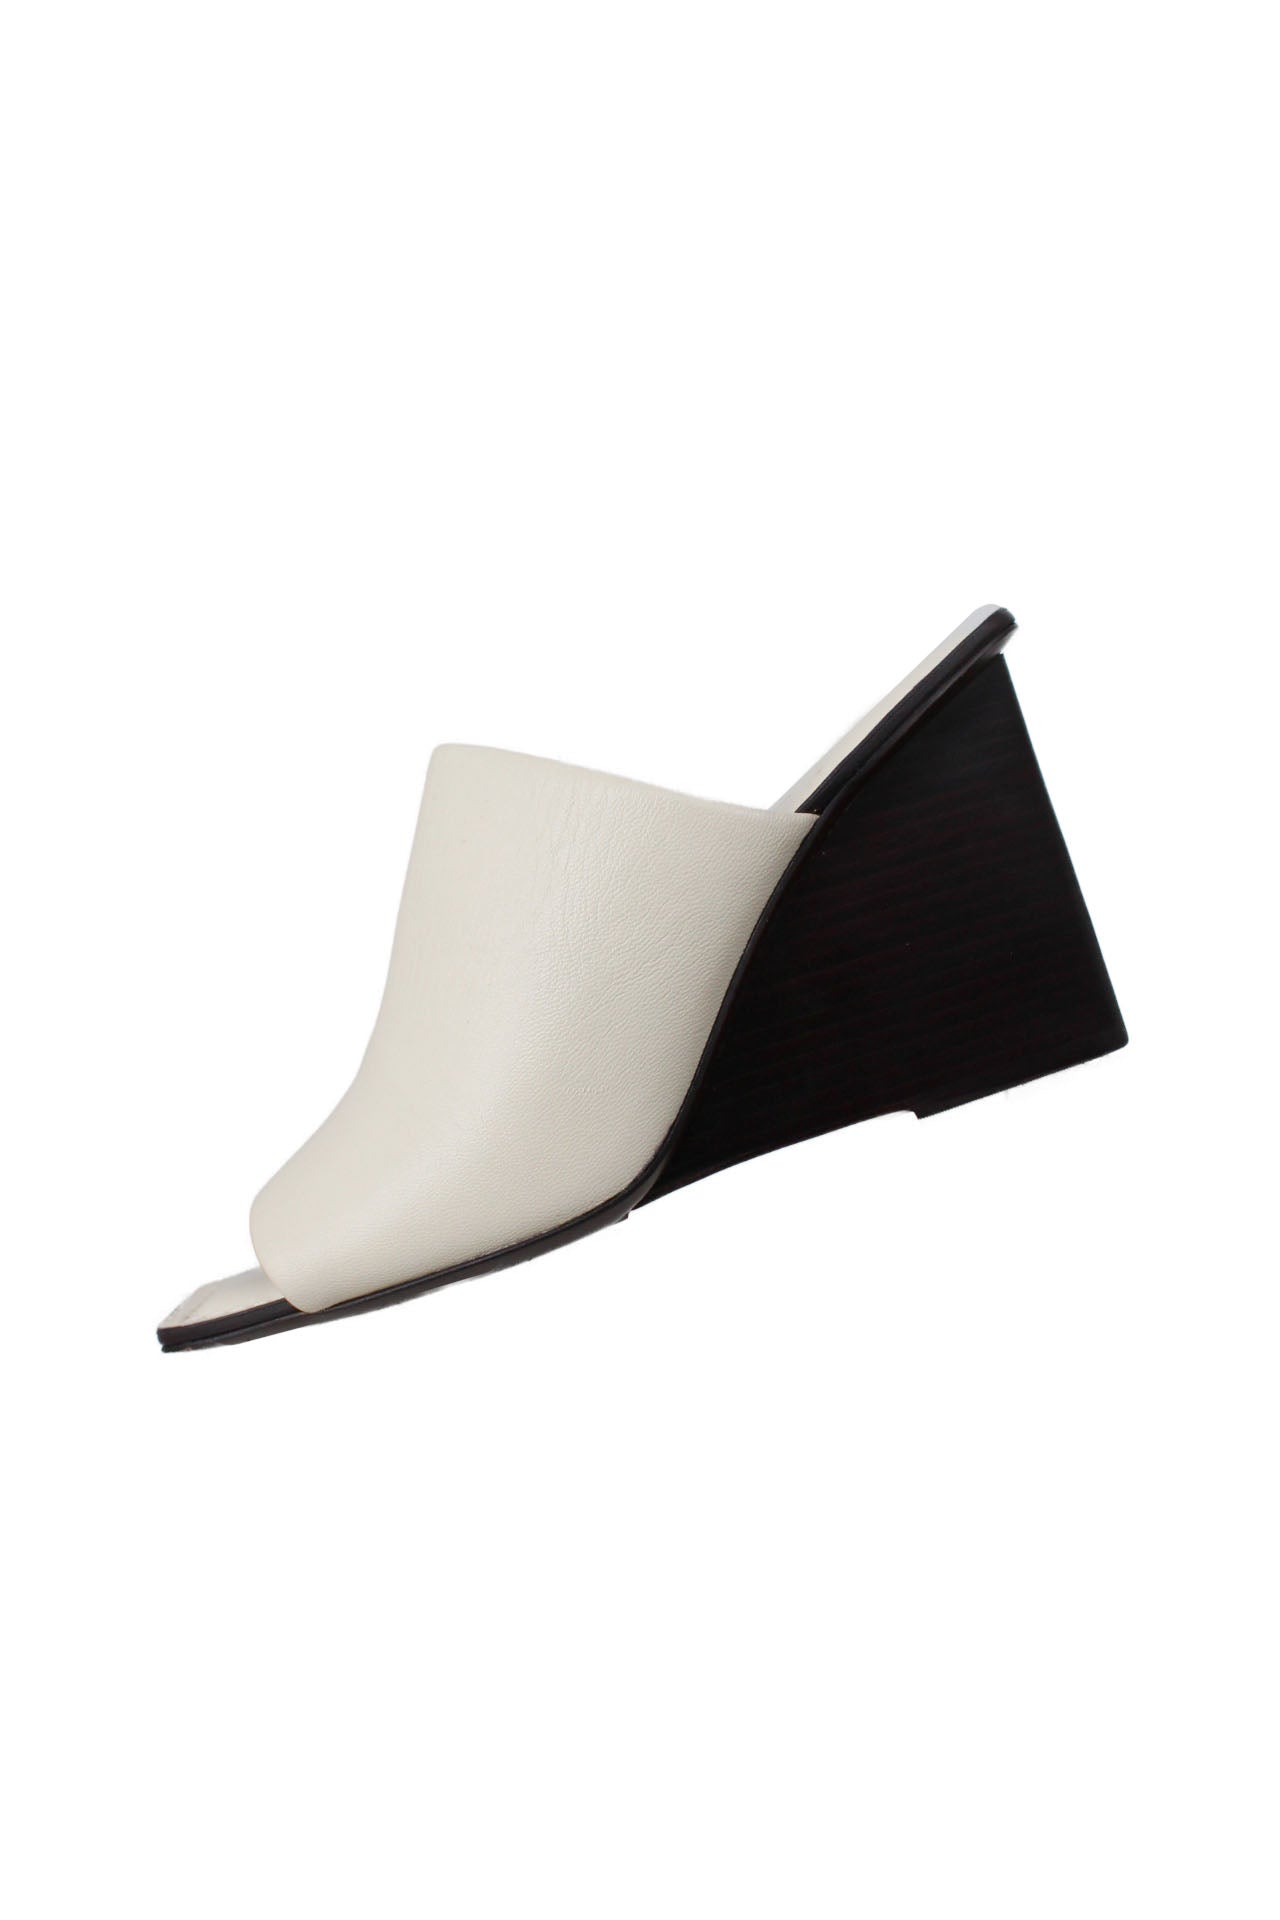 description: mercedes castillo white leather mules. features square toe silhouette, slip on style, and black heel. 